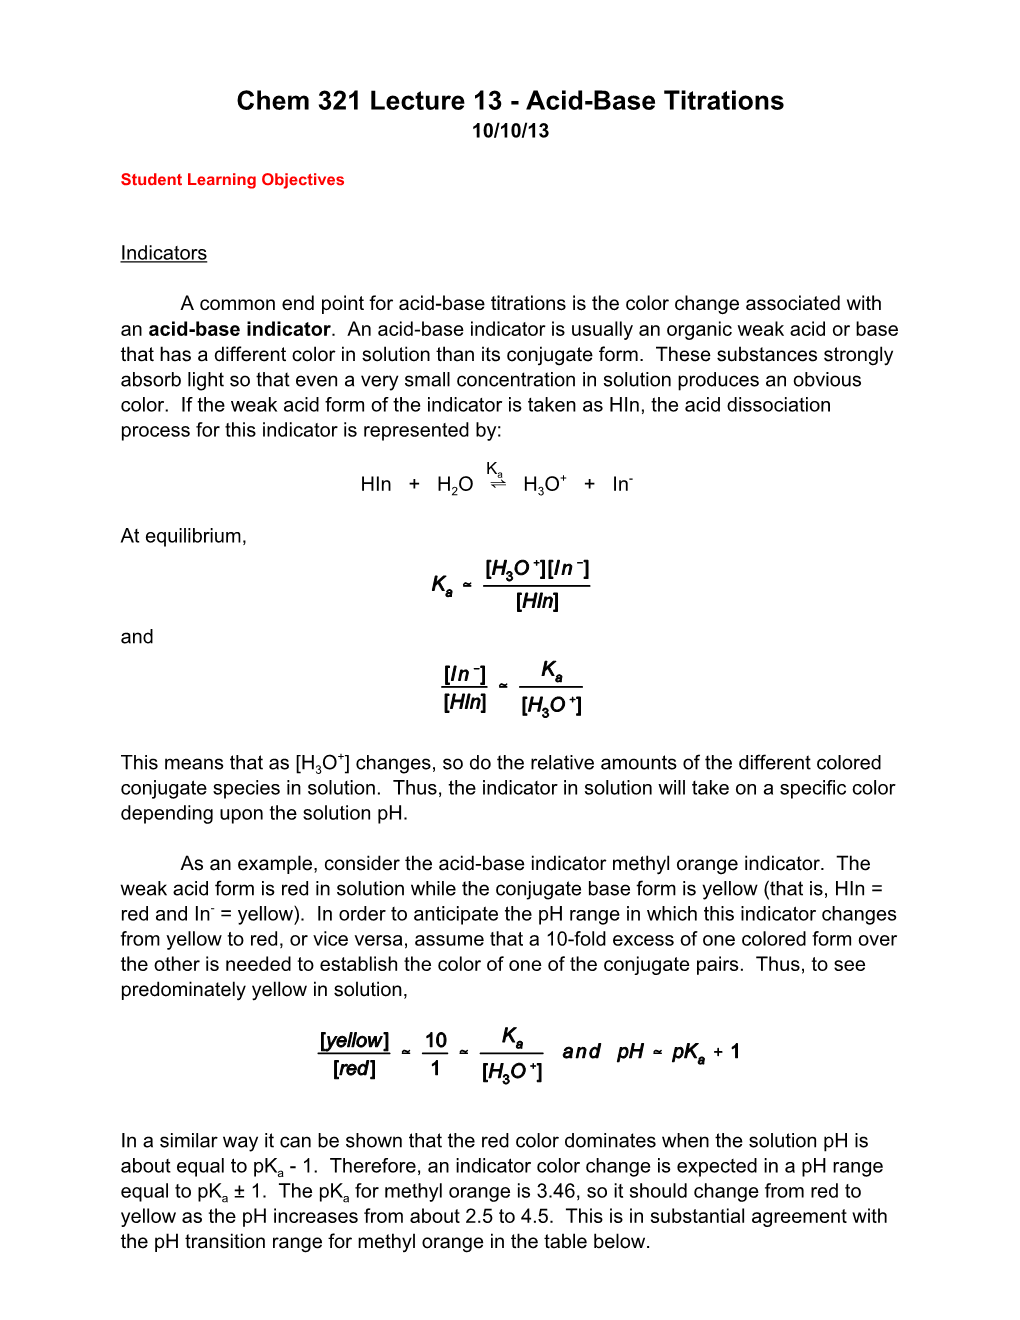 Chem 321 Lecture 13 - Acid-Base Titrations 10/10/13